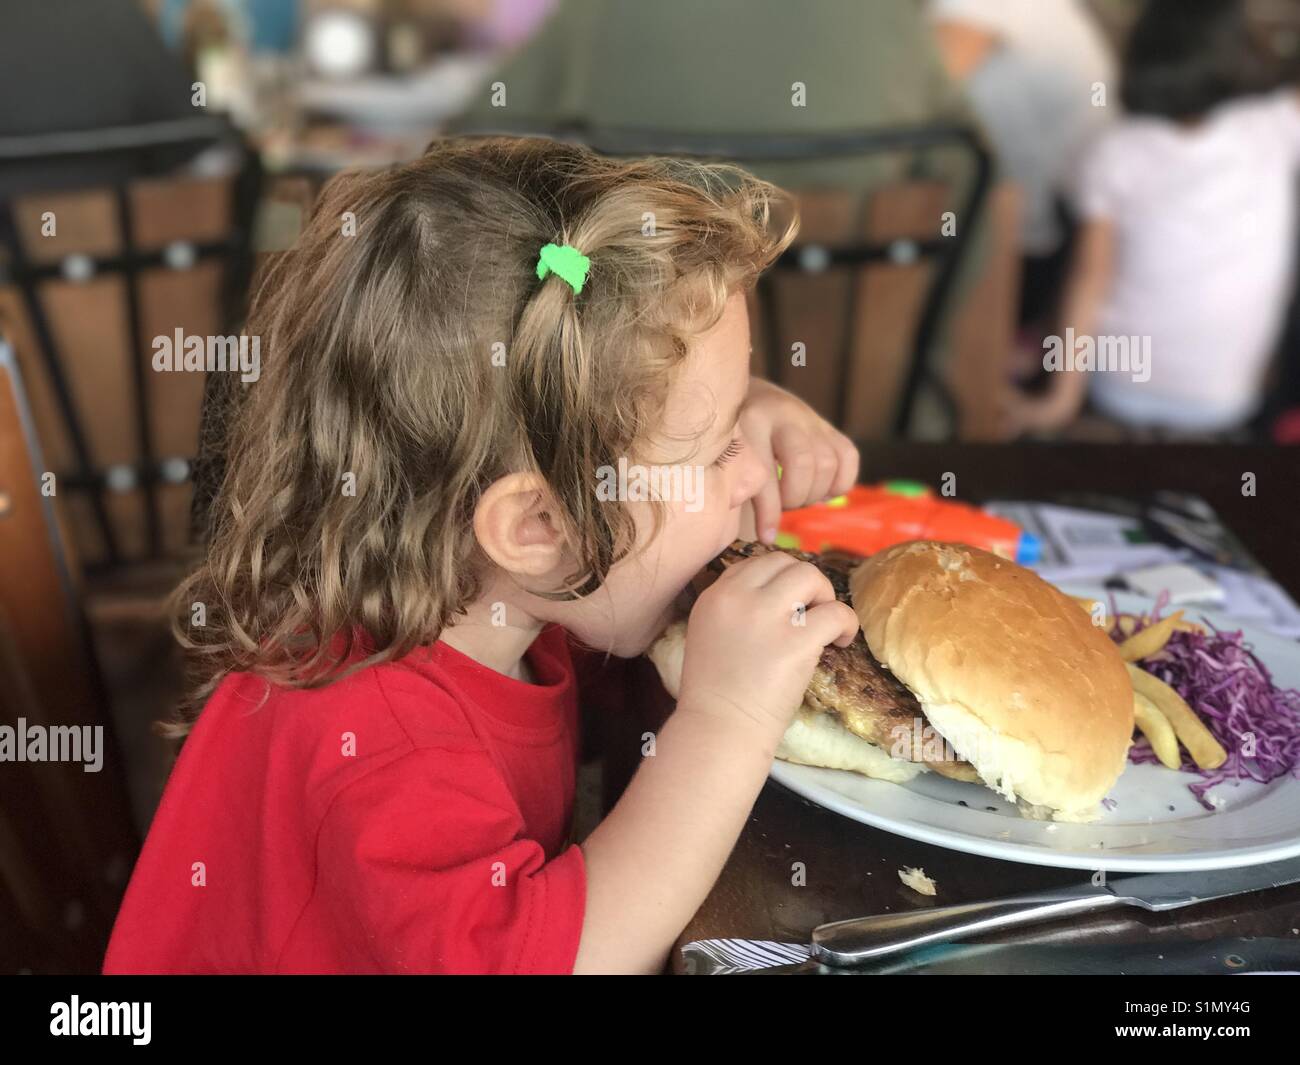 Little girl eating a burger Stock Photo